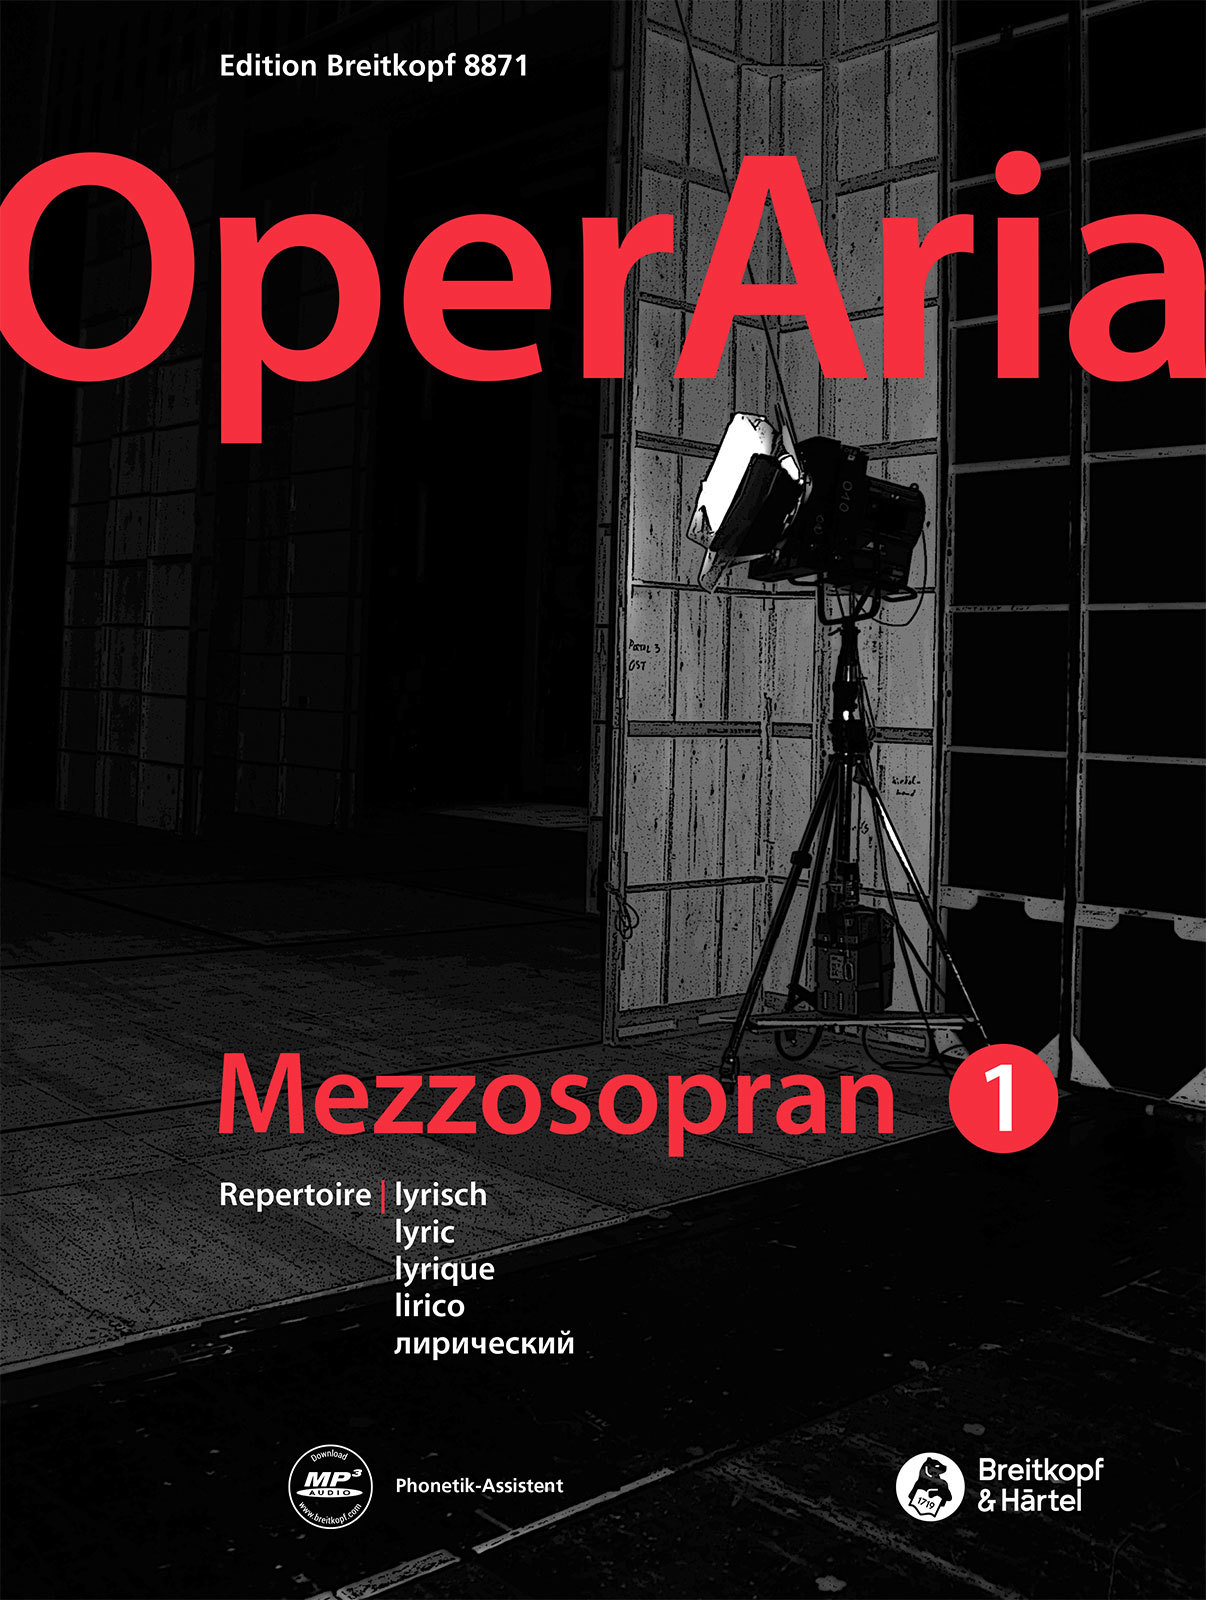 OPERARIA MEZZOSOPRAN 1 REPERTOIRE LYRISCH. DOWNLOAD AUF MP3 RADIO WWW.BREITKOPF.COM